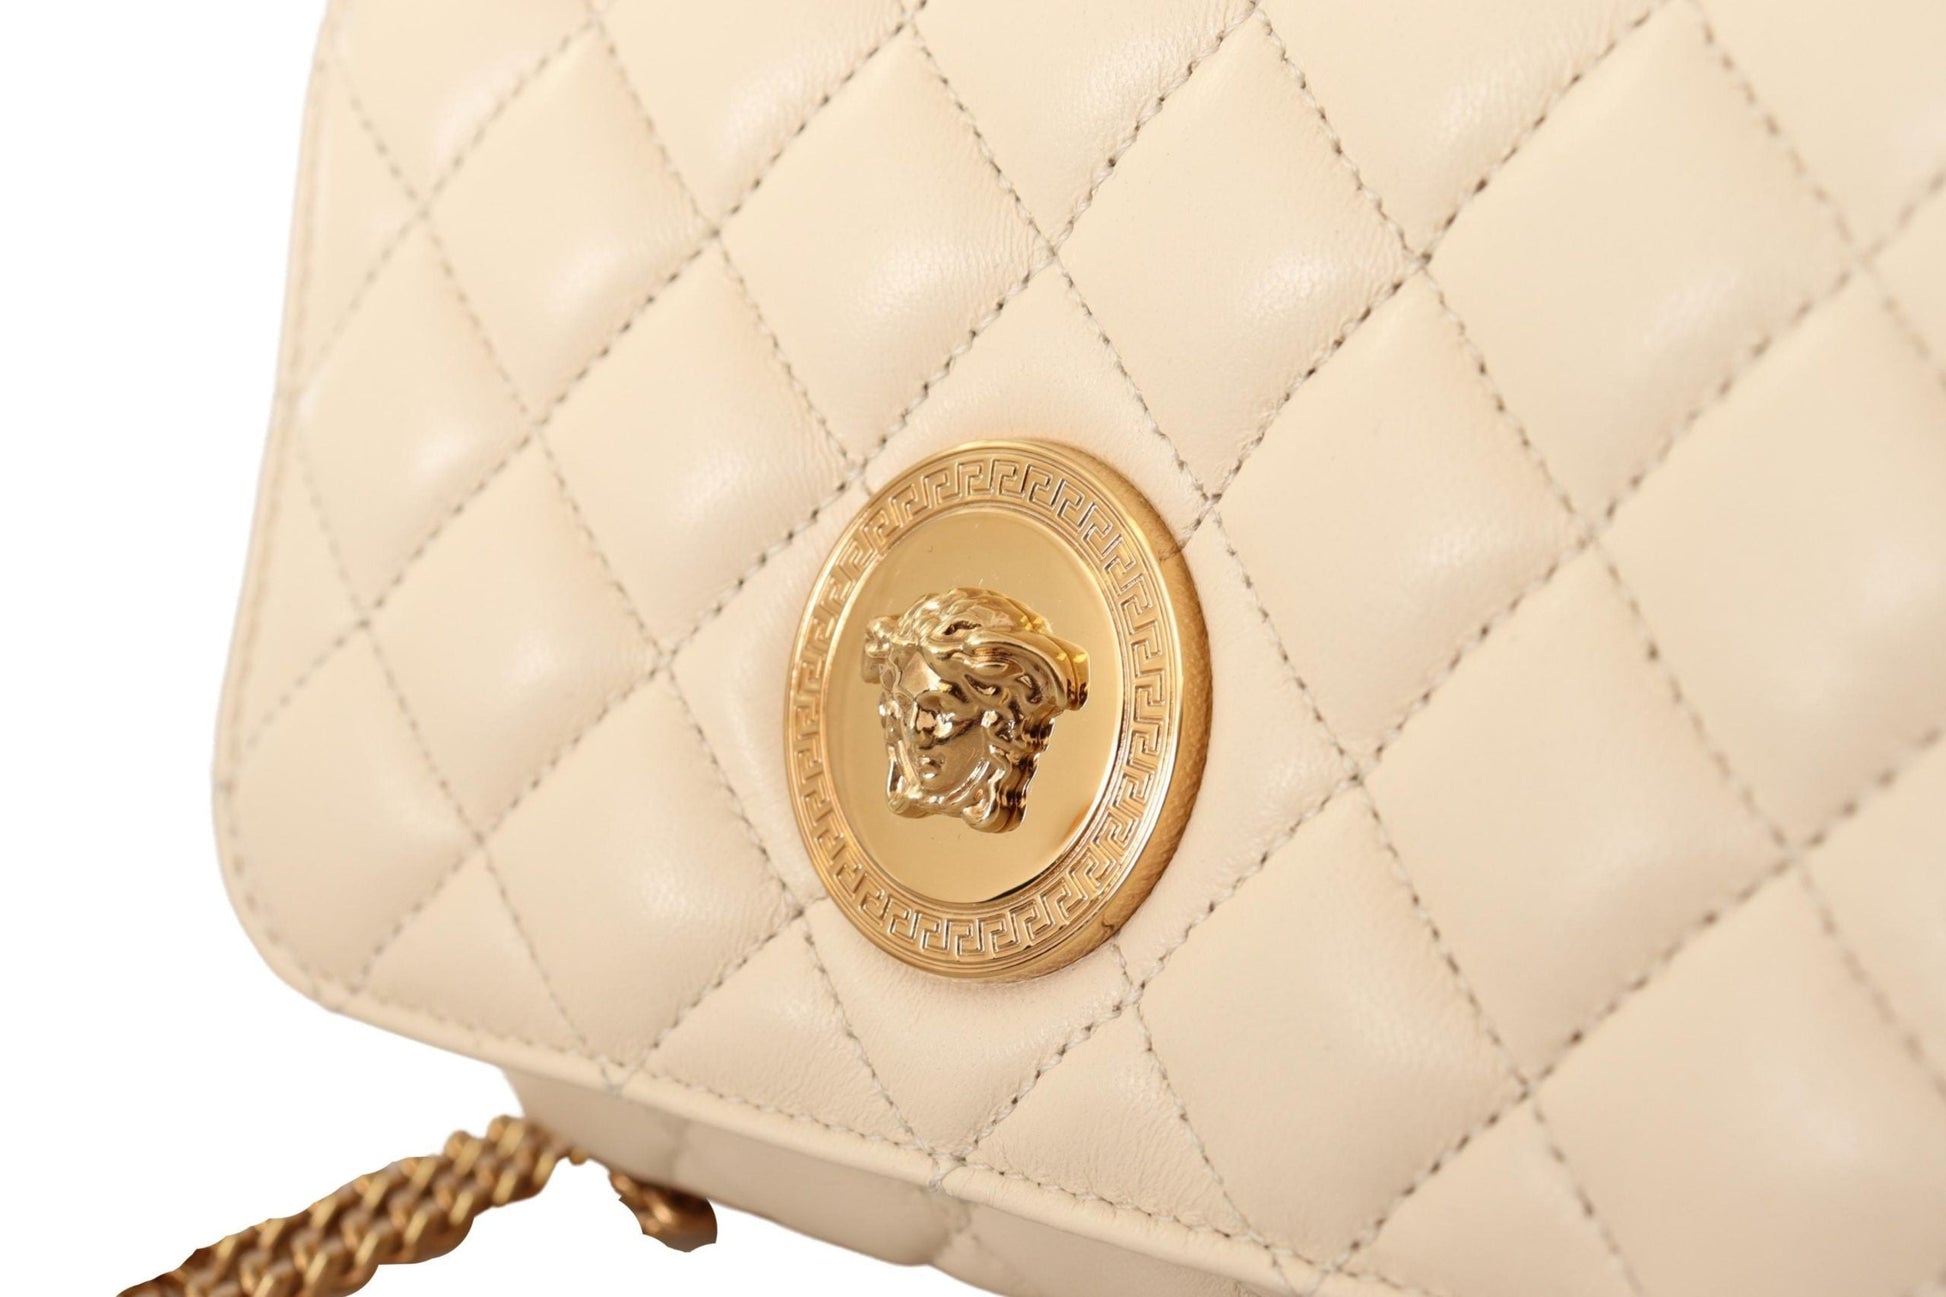 Fashionsarah.com Fashionsarah.com Versace White Nappa Leather Medusa Small Crossbody Bag